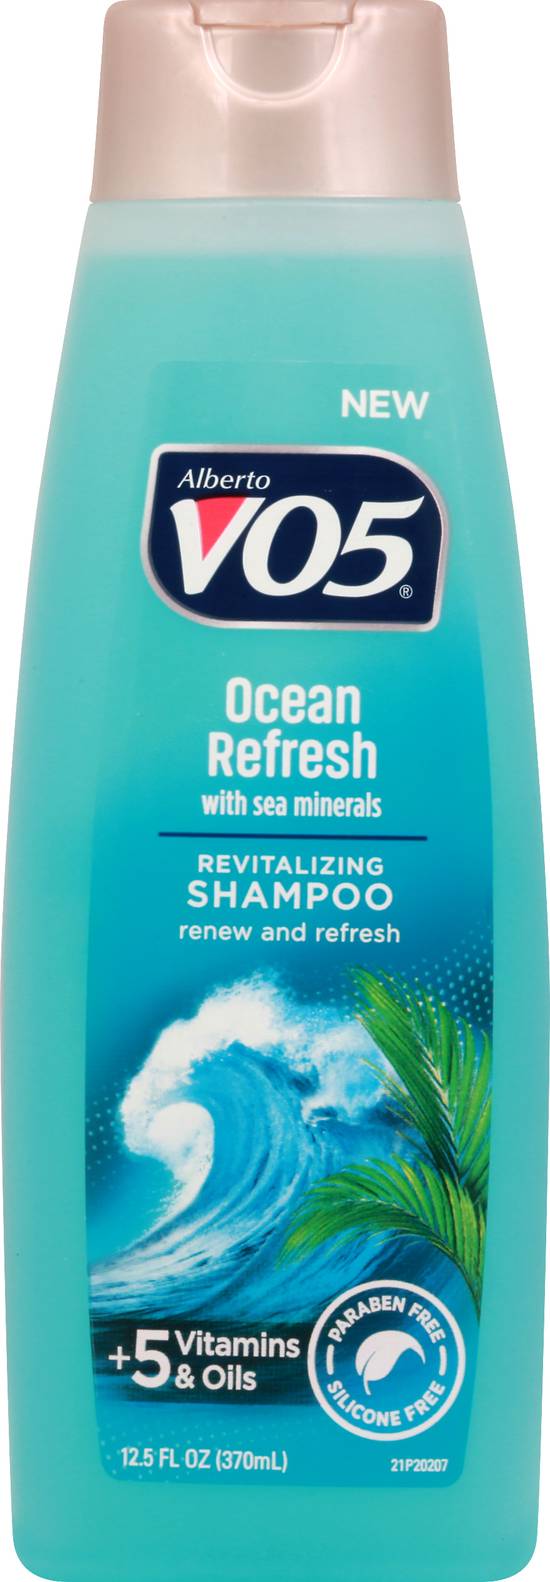 Alberto Vo5 Ocean Refresh Revitalizing Shampoo